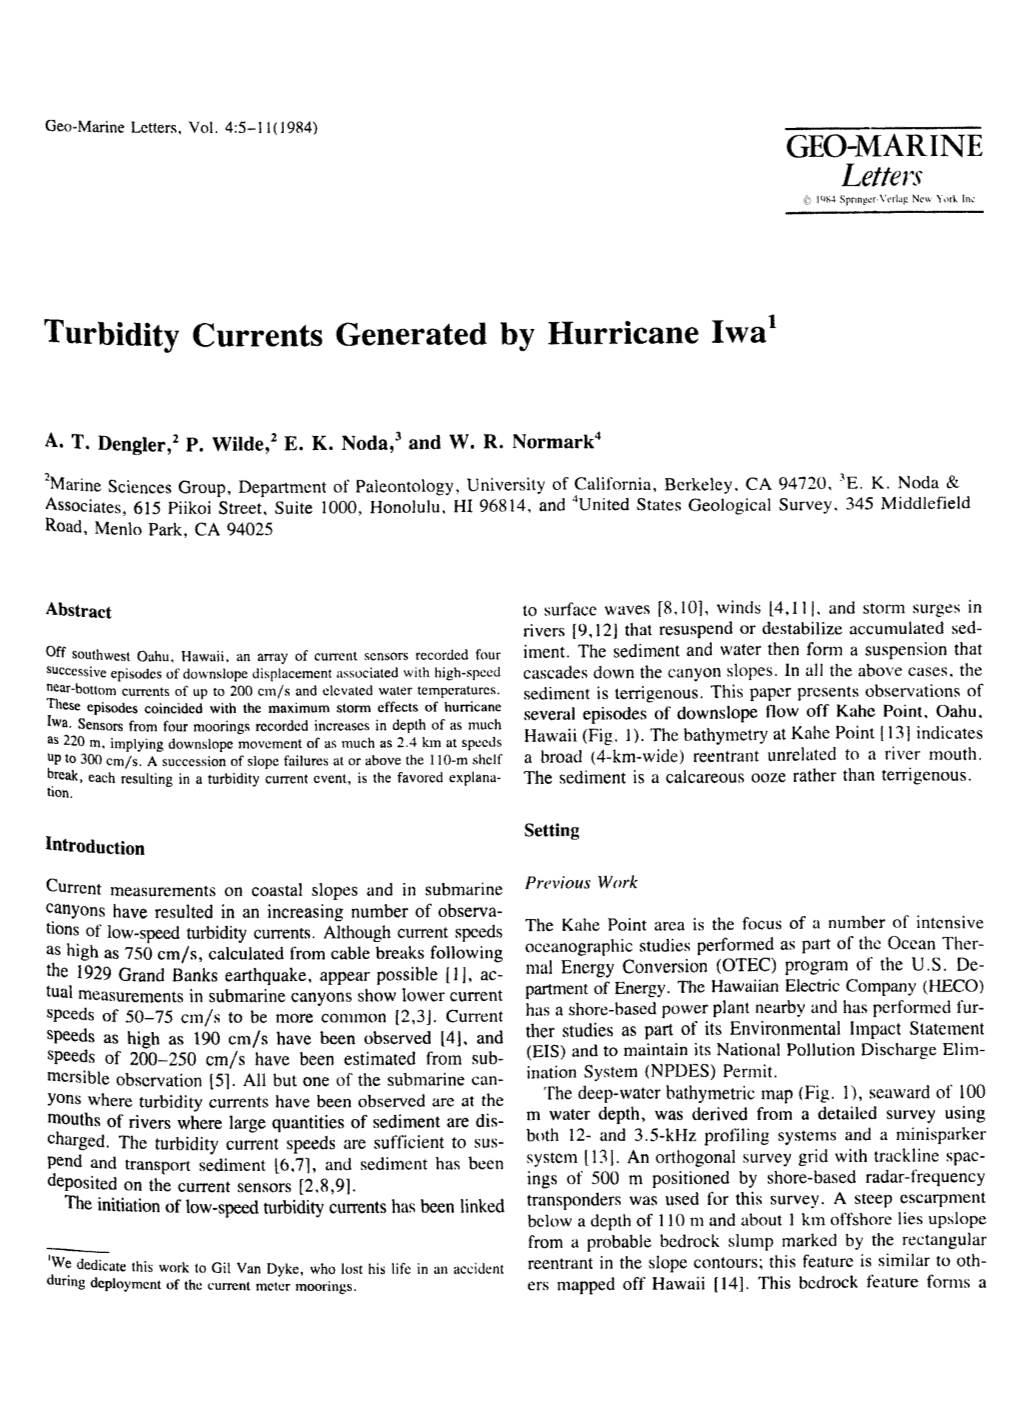 Turbidity Currents Generated by Hurricane Iwa